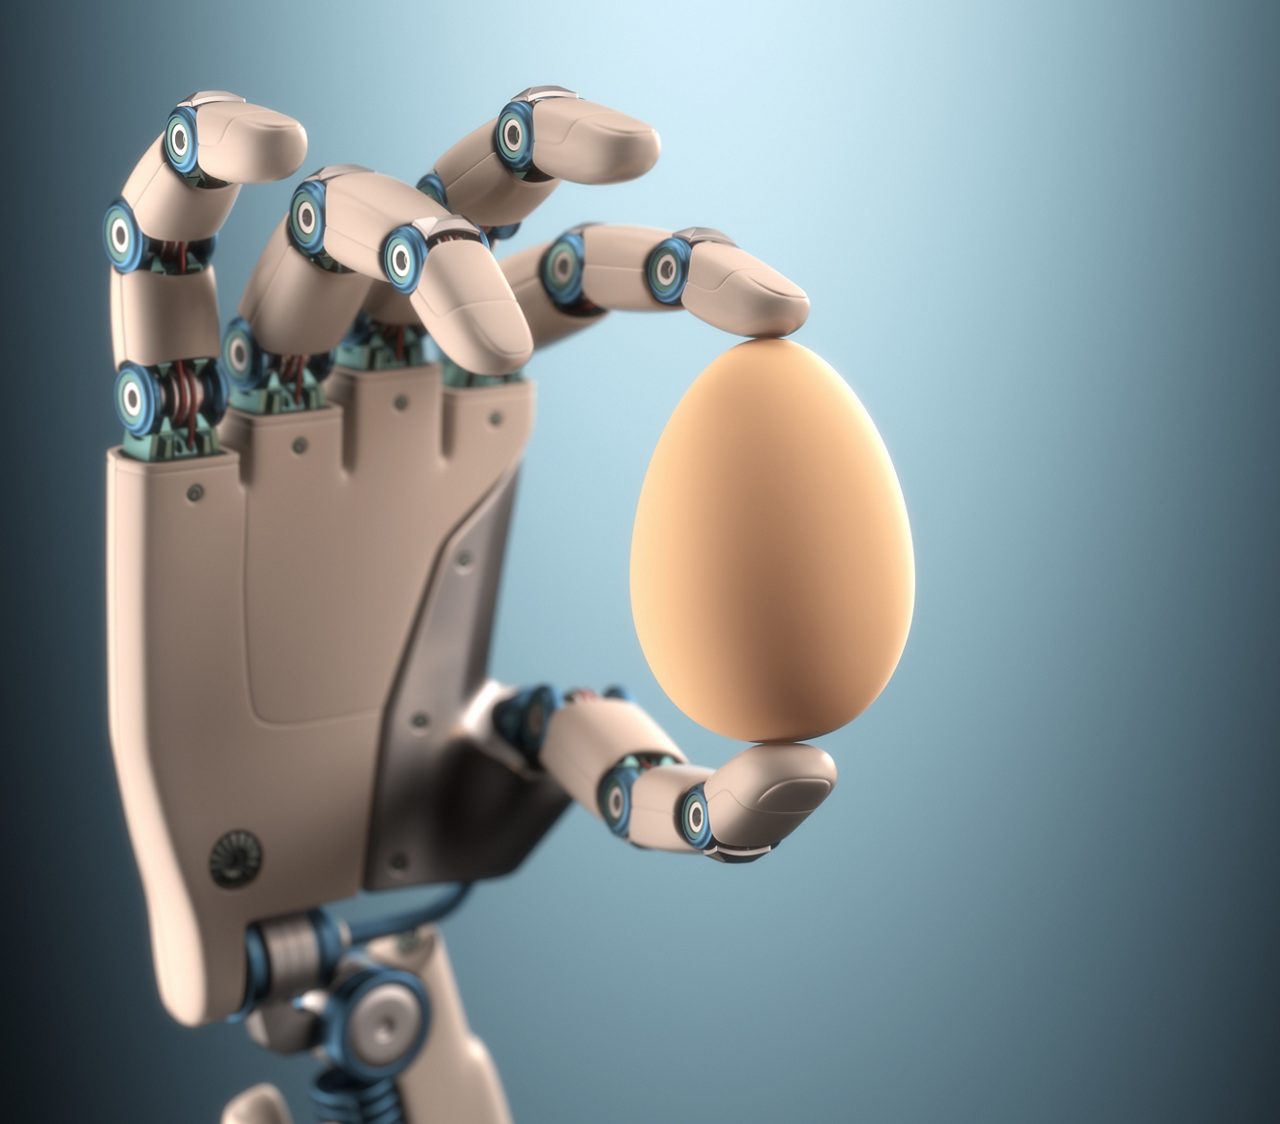 Robot hand holding a chicken egg